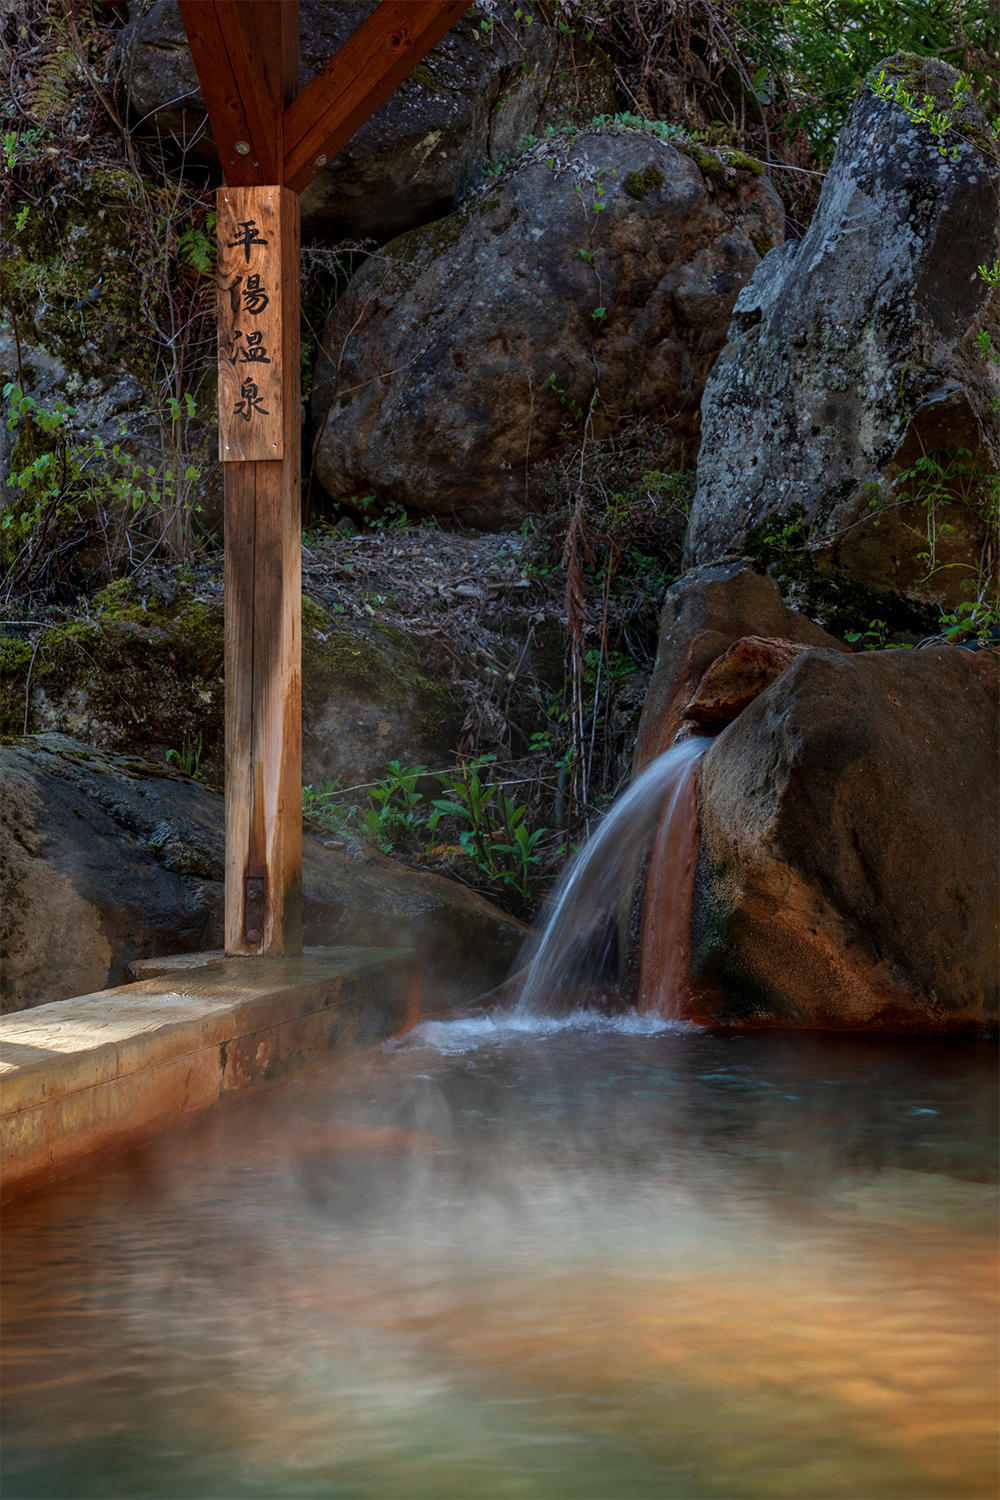 Hirayu’s hot springs